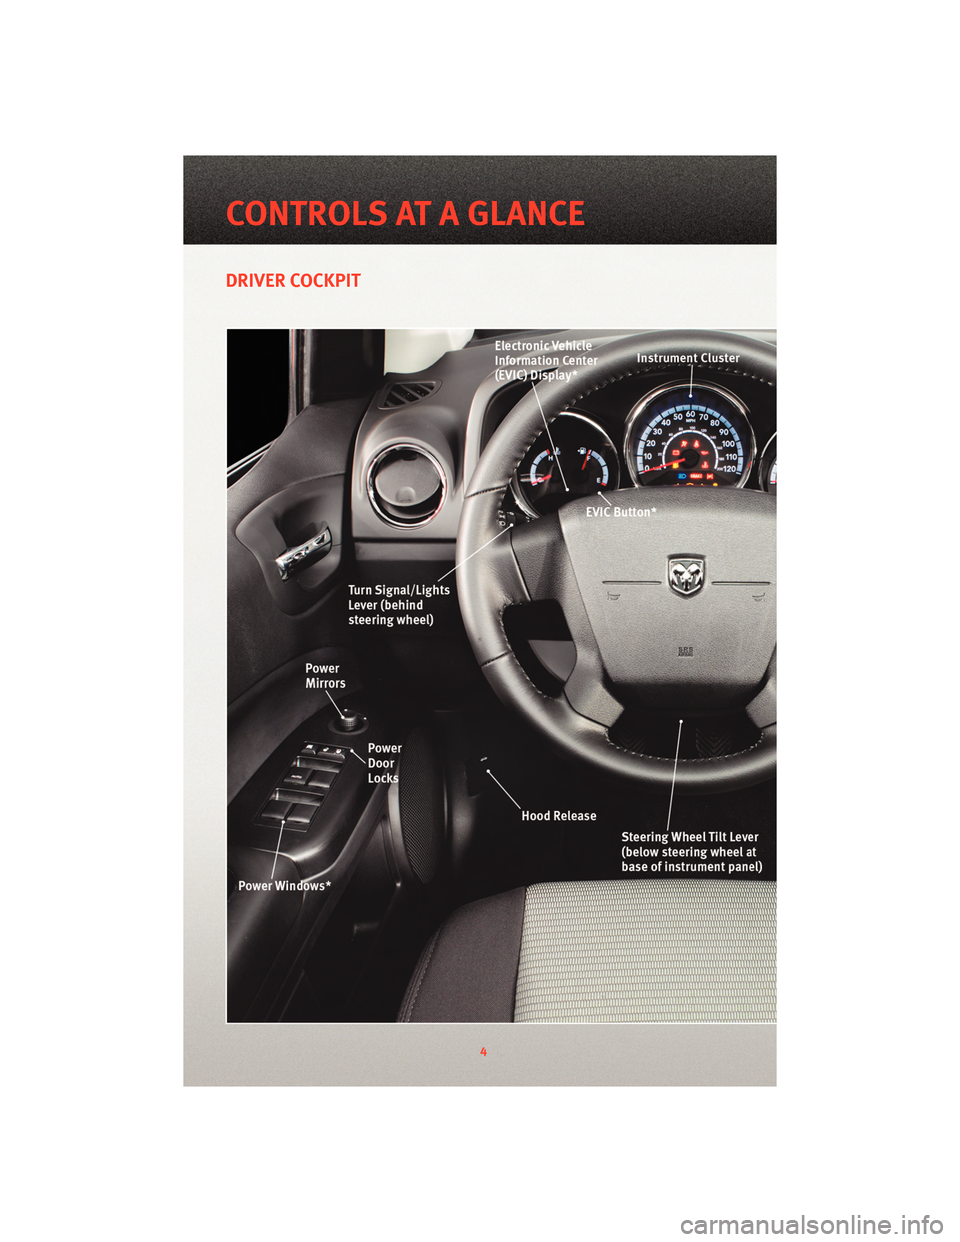 DODGE CALIBER 2010 1.G User Guide DRIVER COCKPIT
4
CONTROLS AT A GLANCE 